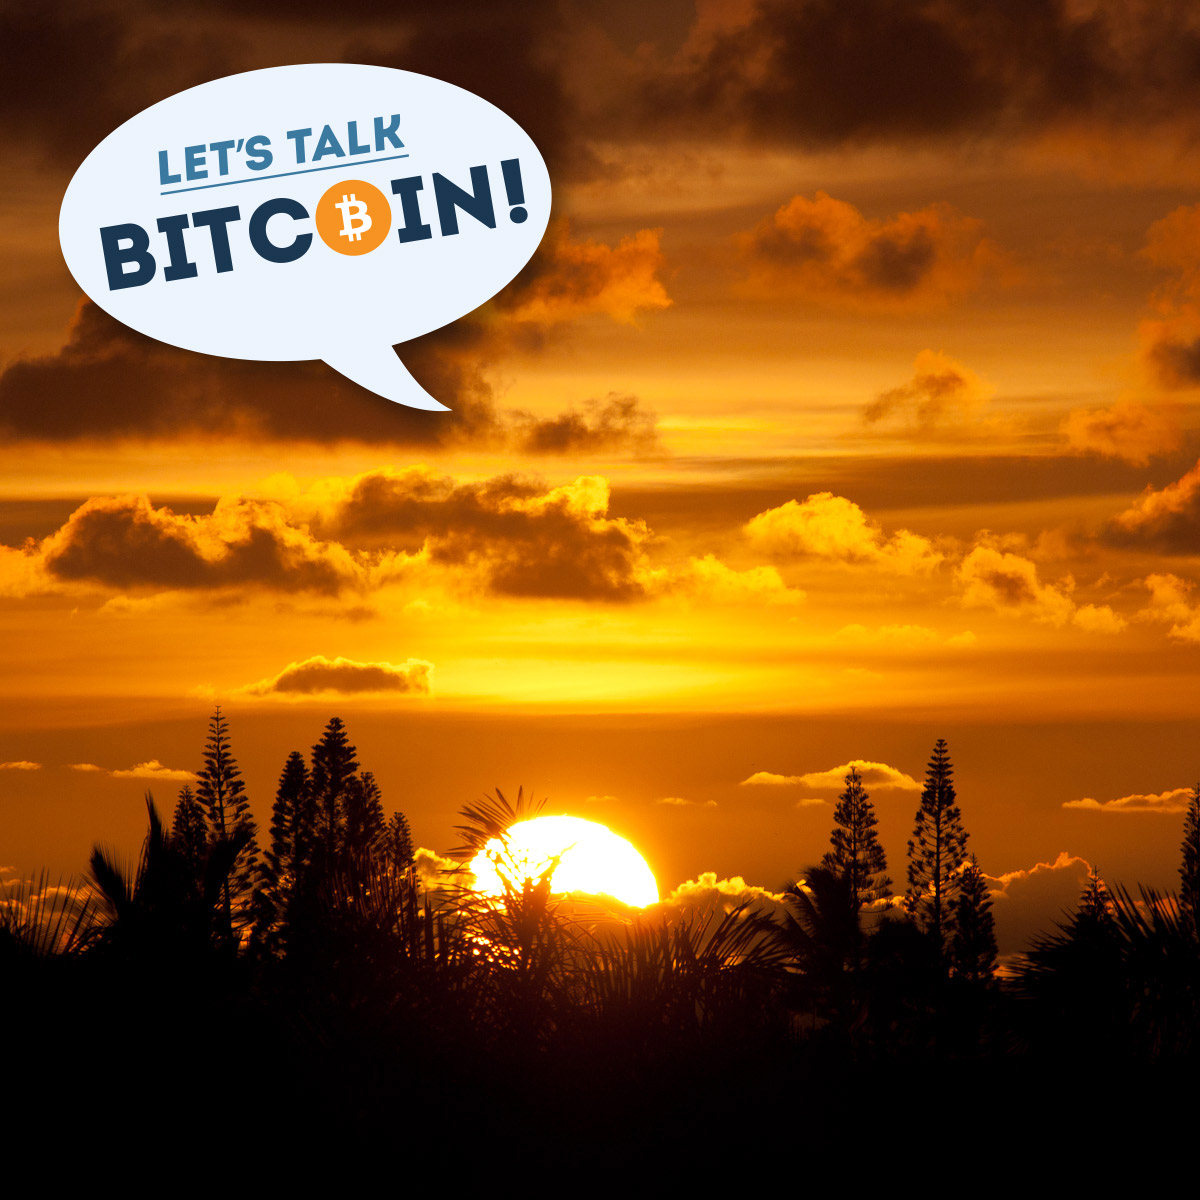 The Let's Talk Bitcoin! Show:adam@letstalkbitcoin.com